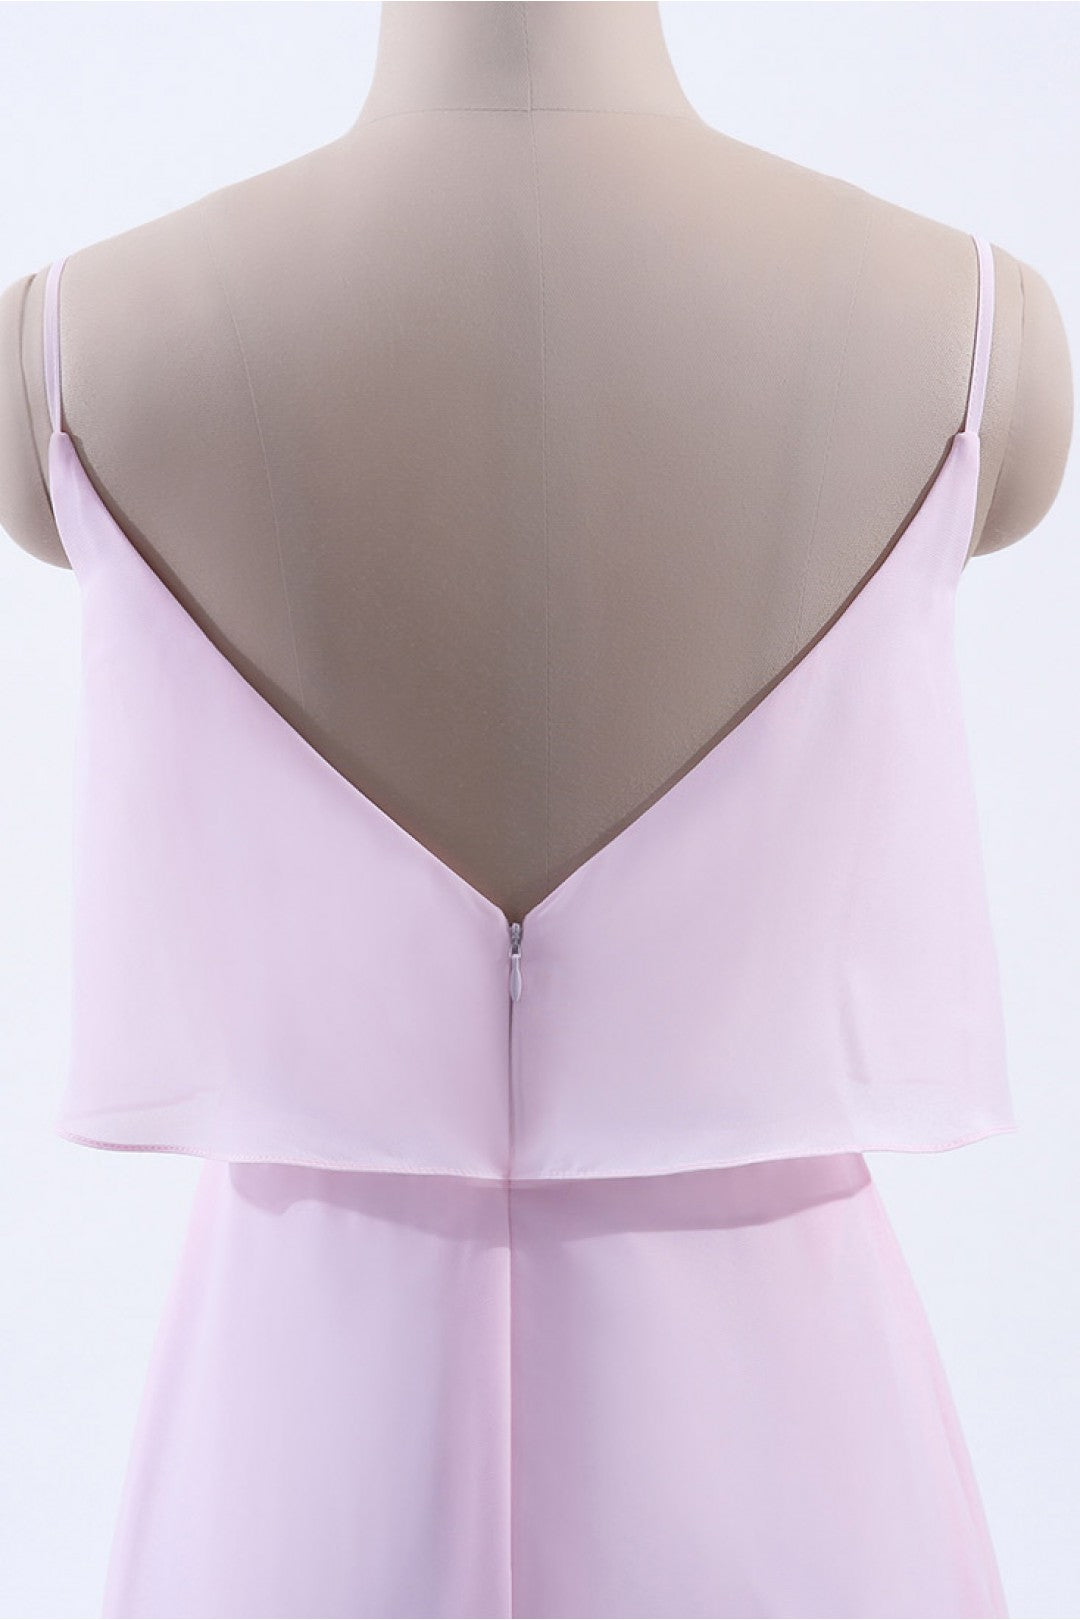 Pink Flounce Chiffon Straps A-line Long Bridesmaid Dress